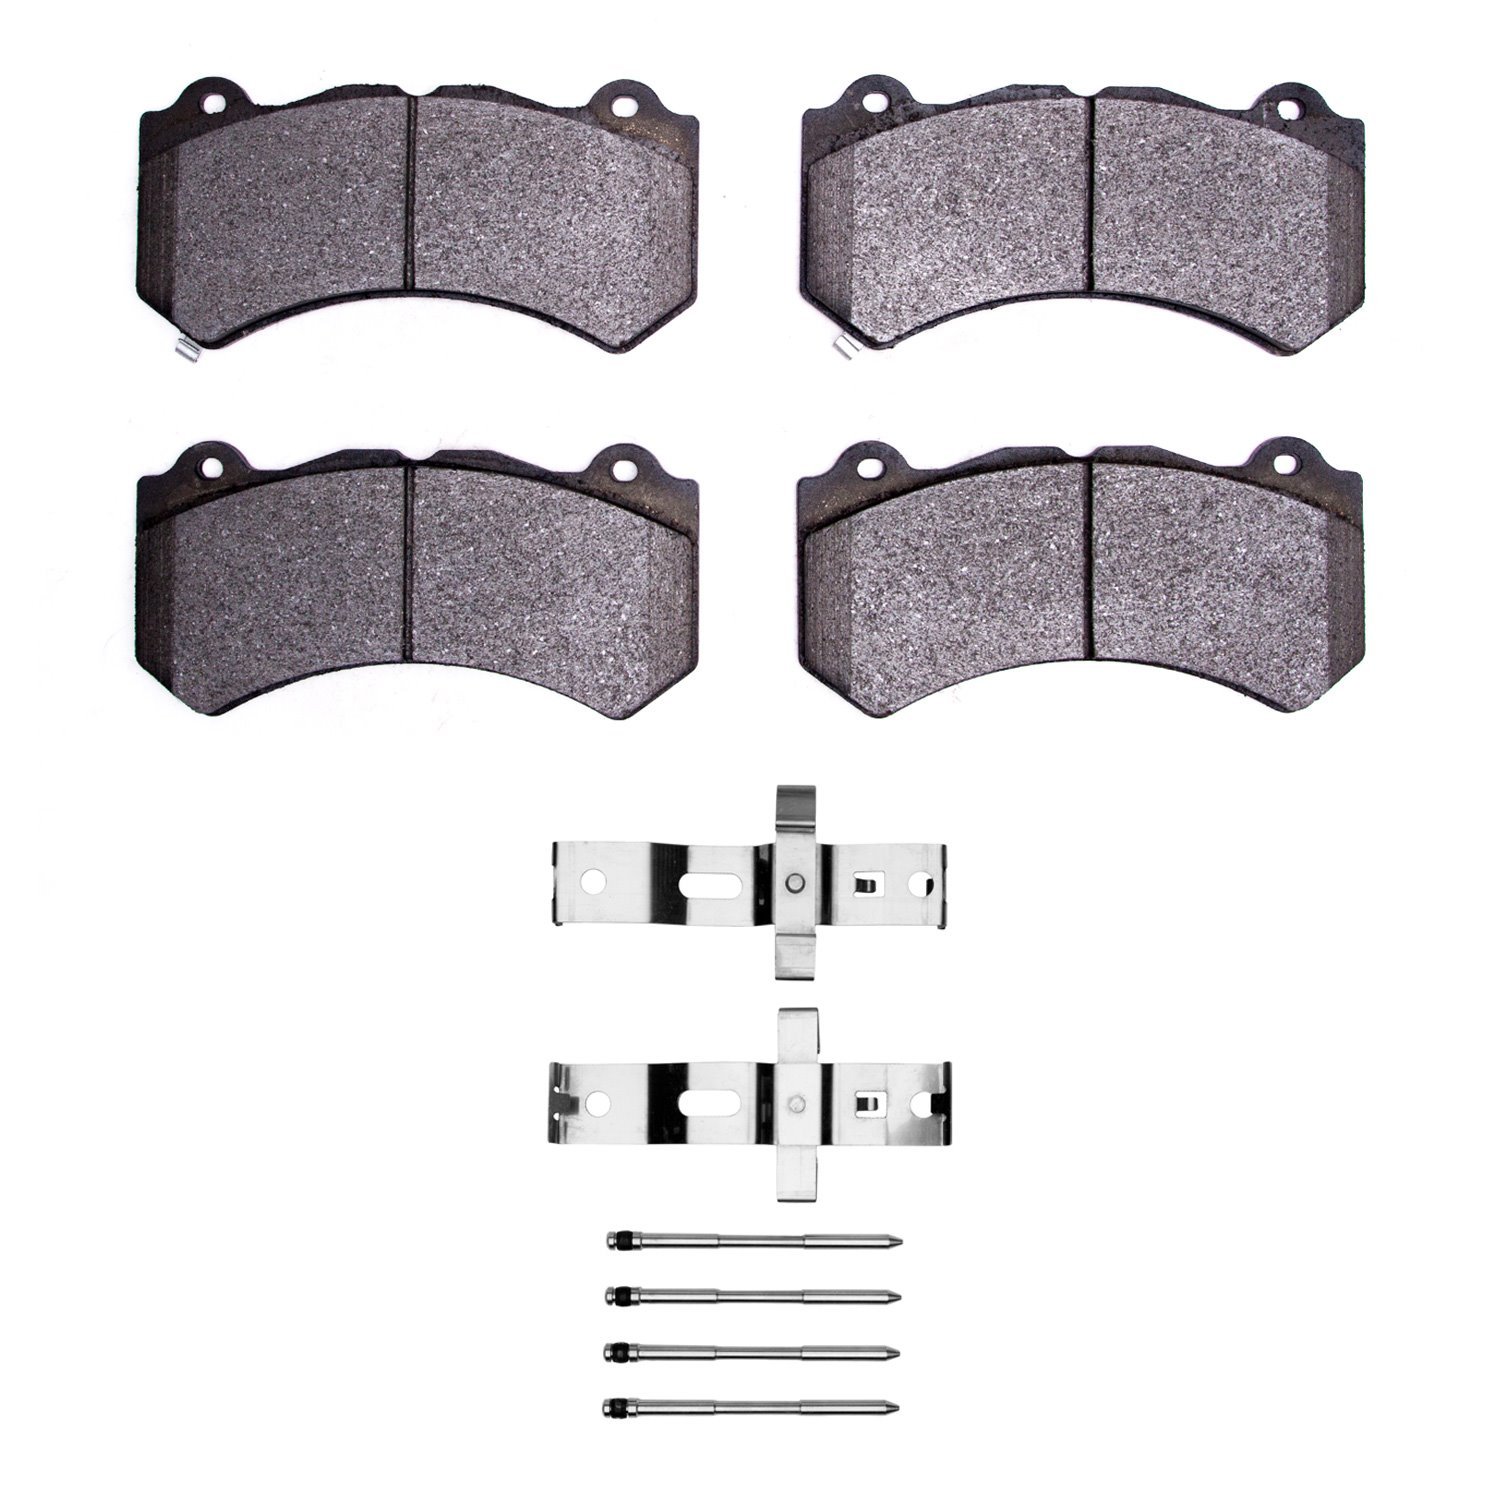 1600-1405-02 5000 Euro Ceramic Brake Pads & Hardware Kit, Fits Select Mopar, Position: Front